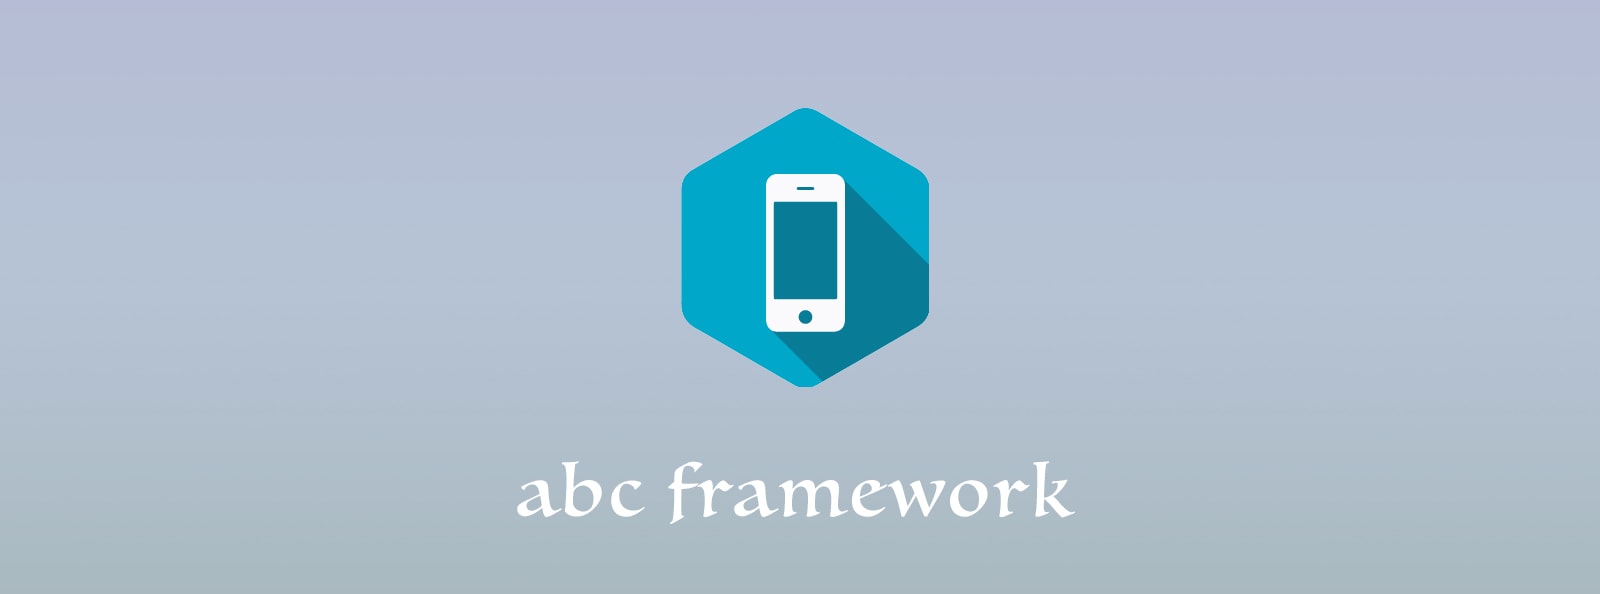 Abc framework